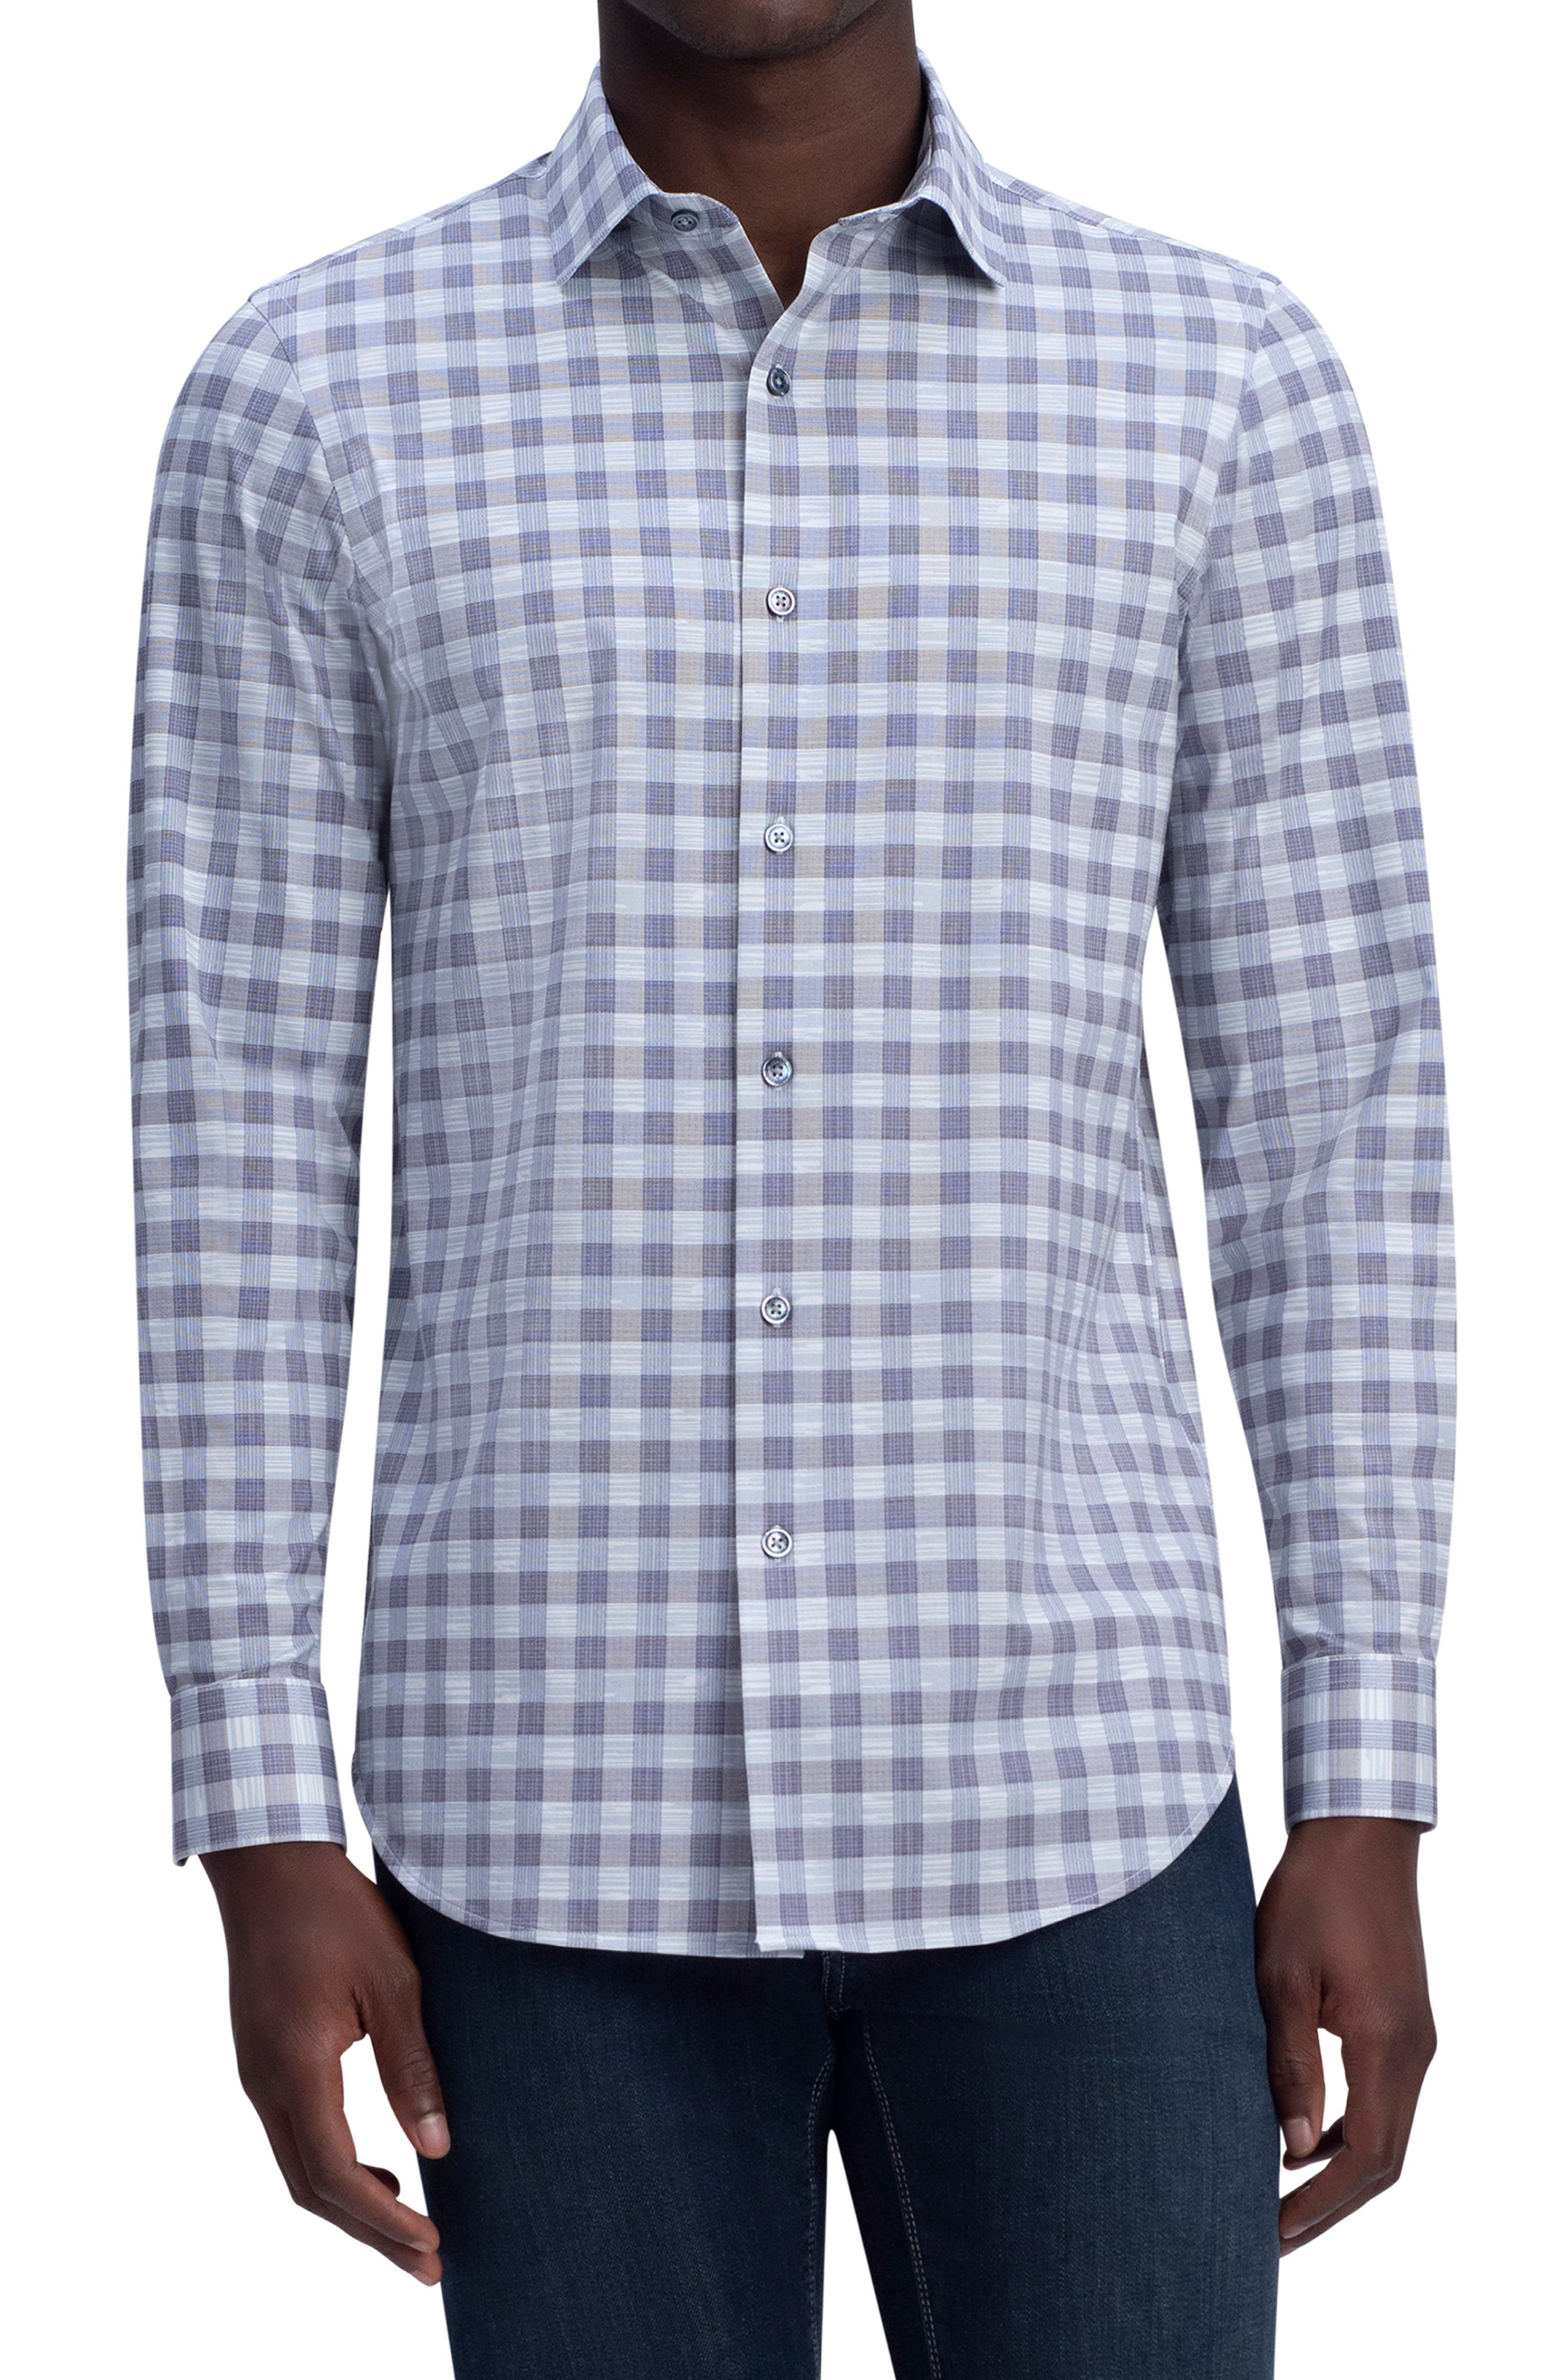 BUGATCHI Shaped Fit XL Geometric Navy Blue White Check Sport Shirt $169 